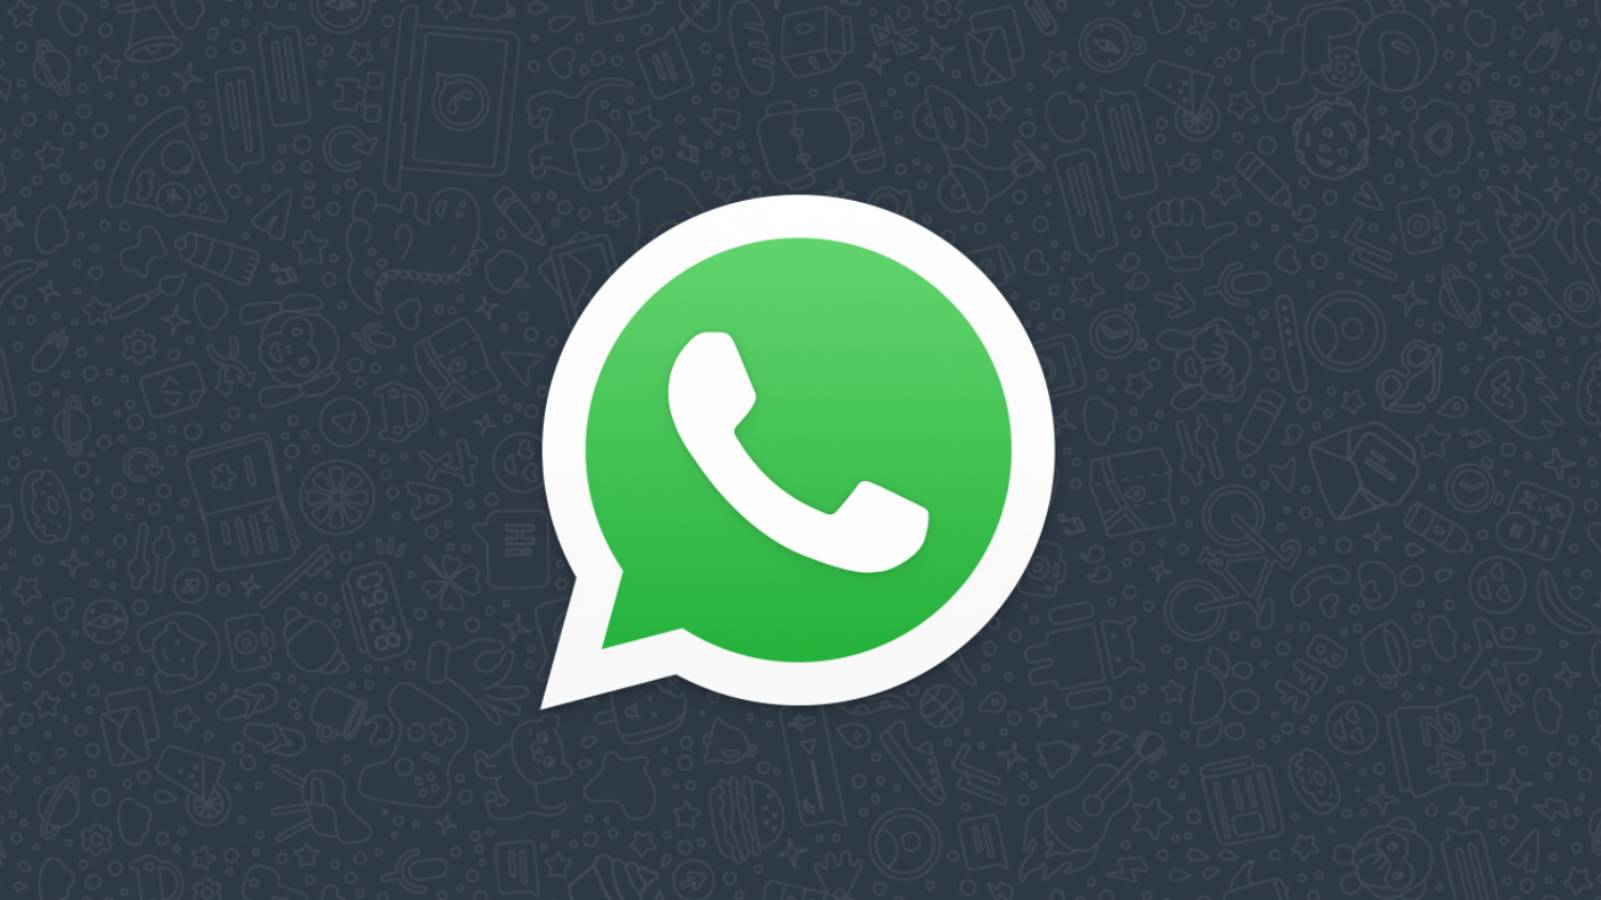 Almacenamiento de whatsapp